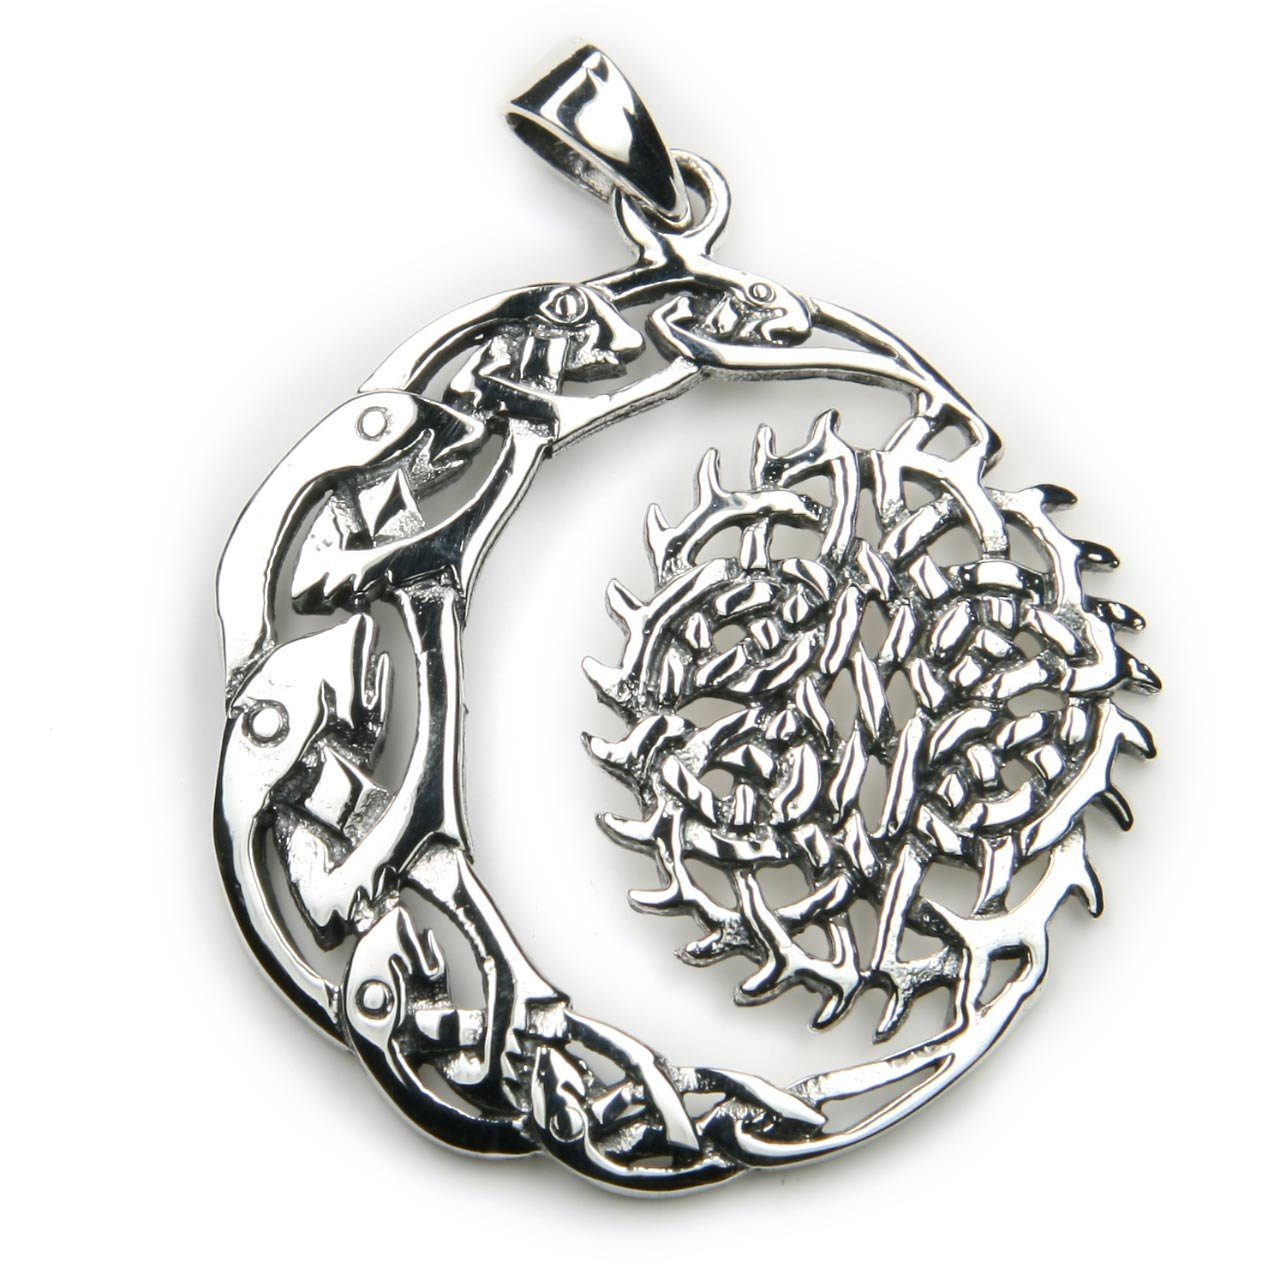 NKlaus Kettenanhänger 3,2cm Kettenanhänger Keltische Sonne Mond Silber, 925 Sterling Silber Silberschmuck für Damen